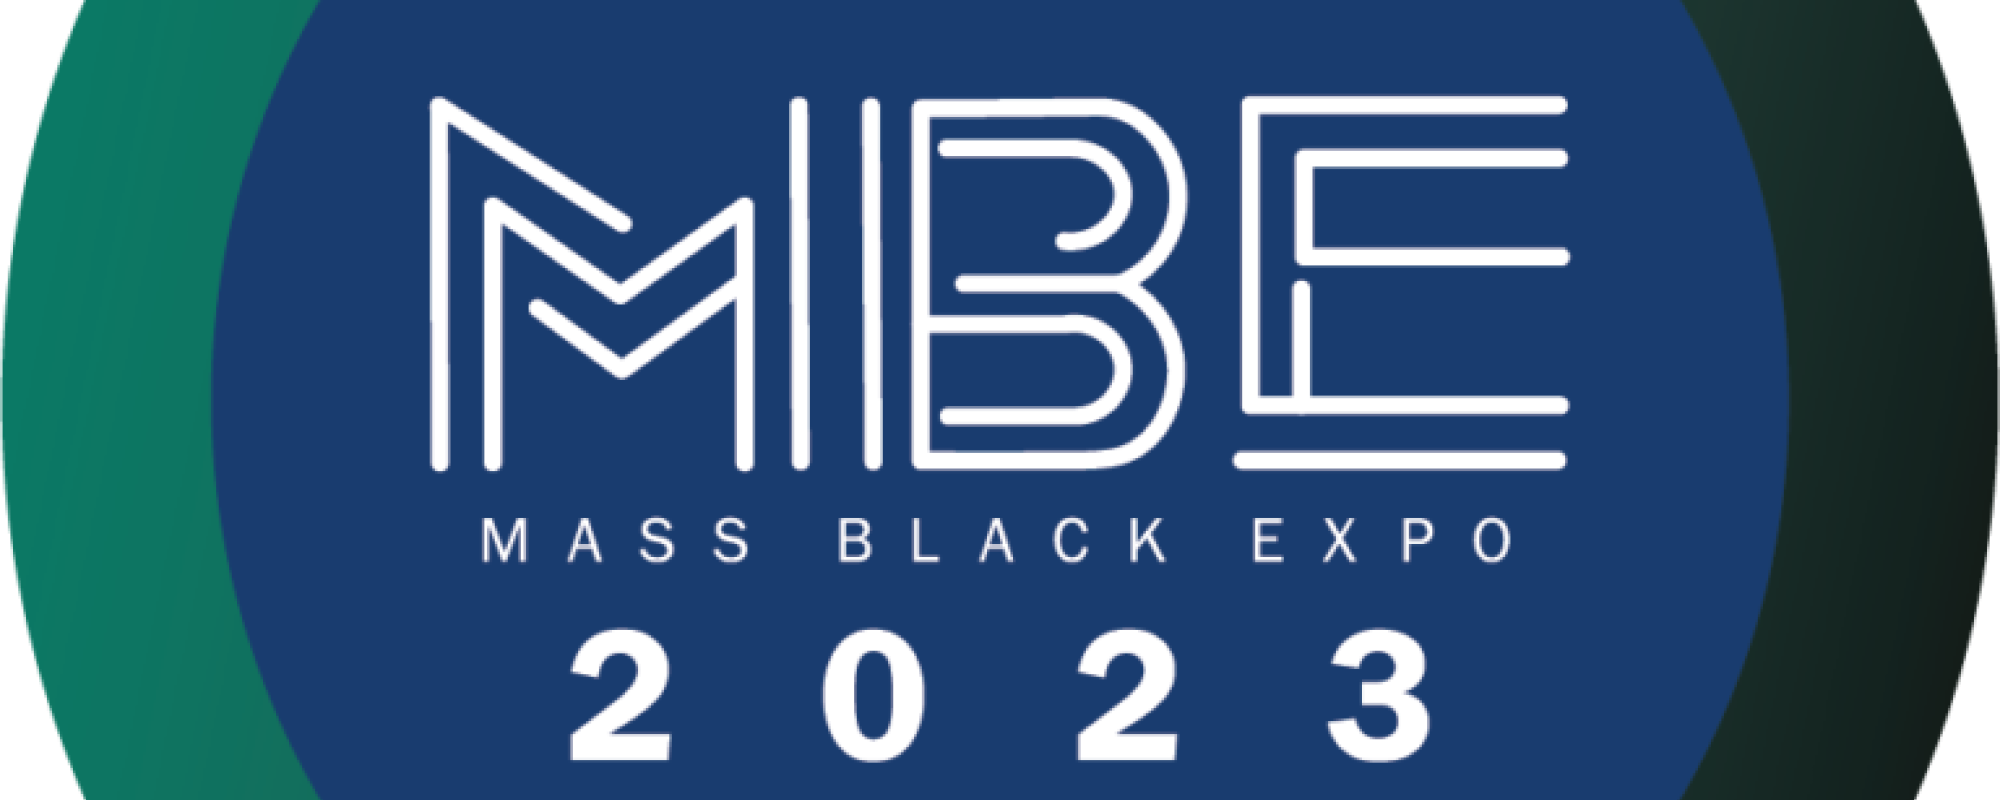 Mass Black Expo